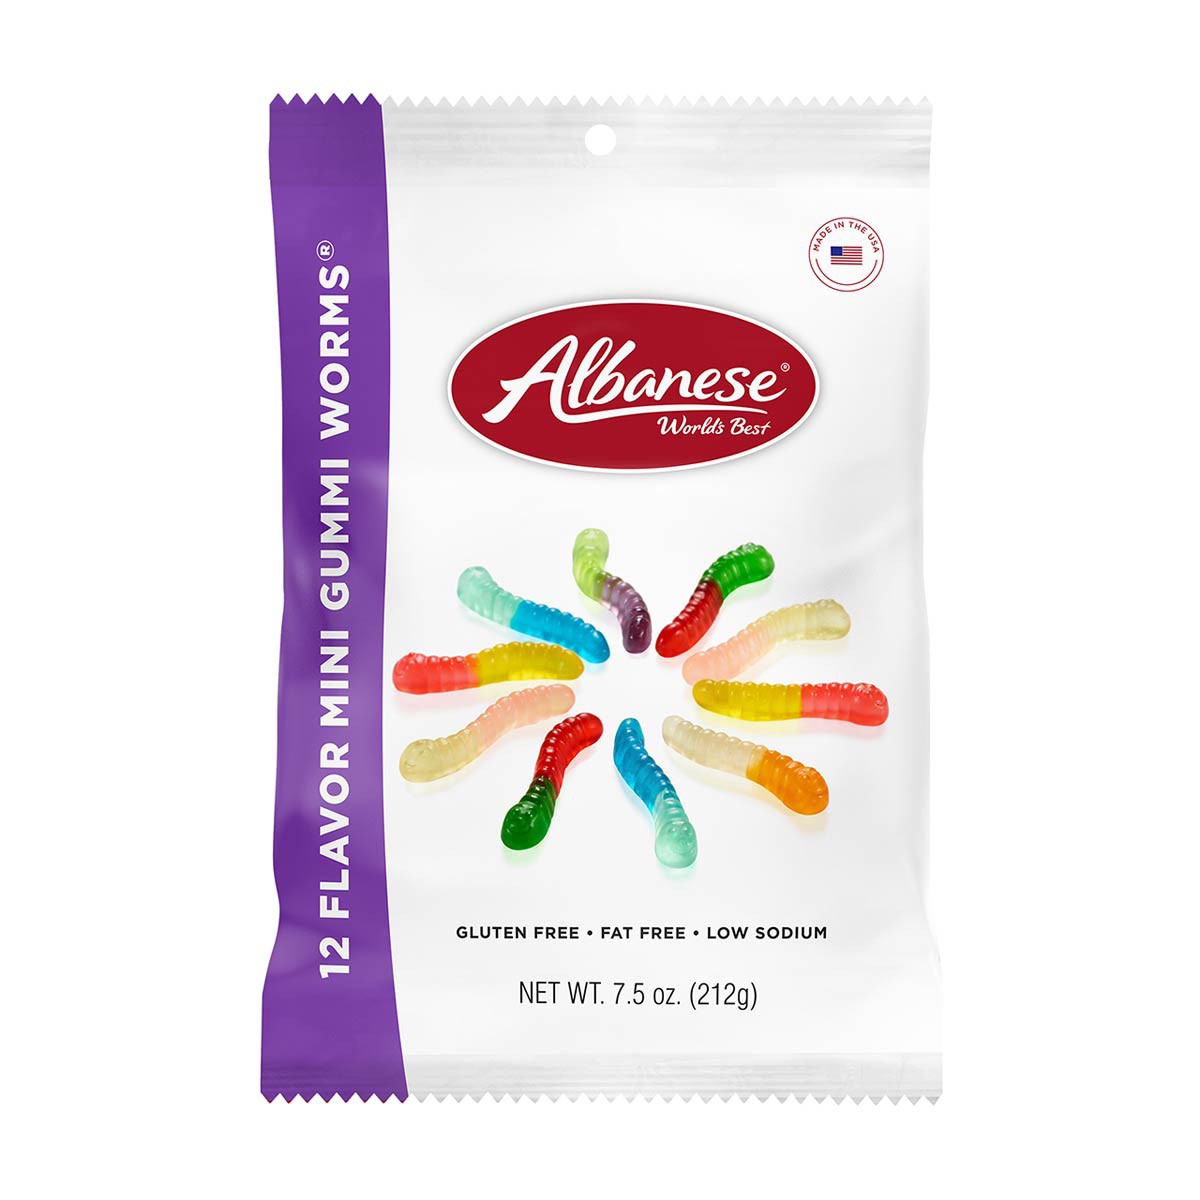 Albanese World's Best 12 Flavor Mini Gummi Worms, 7.5 oz